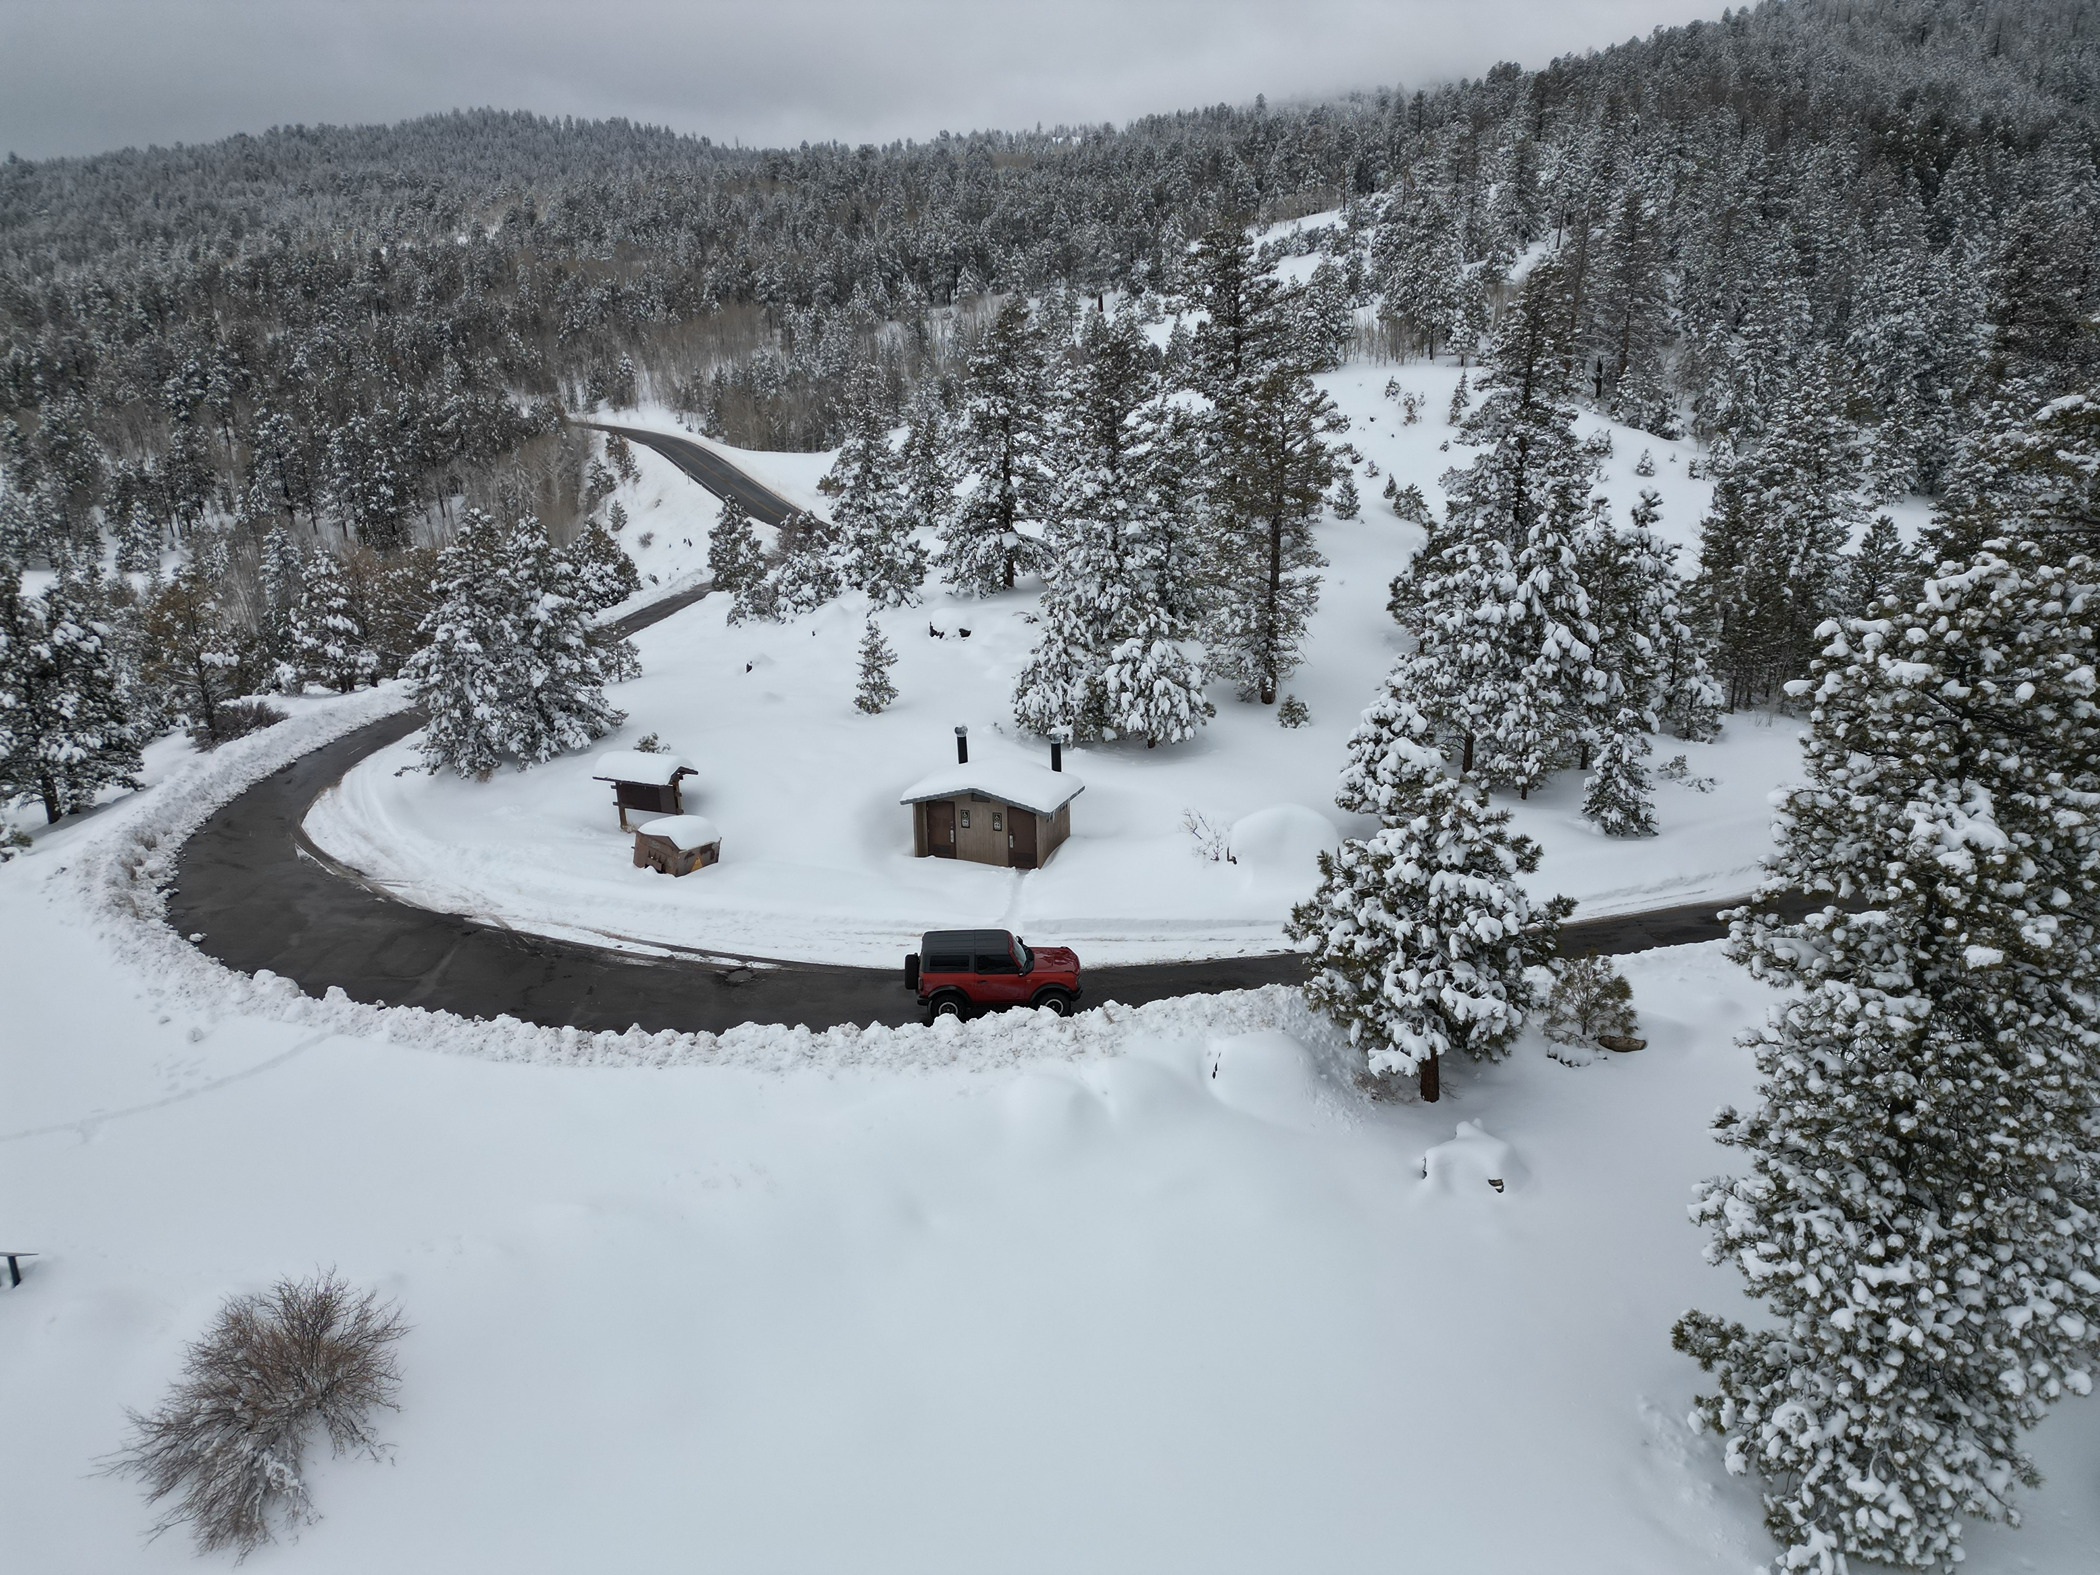 Ford Bronco ❄️❄️❄️❄️ Snow Day Saturday ❄️❄️❄️❄️❄️ DJI_0148.JPG